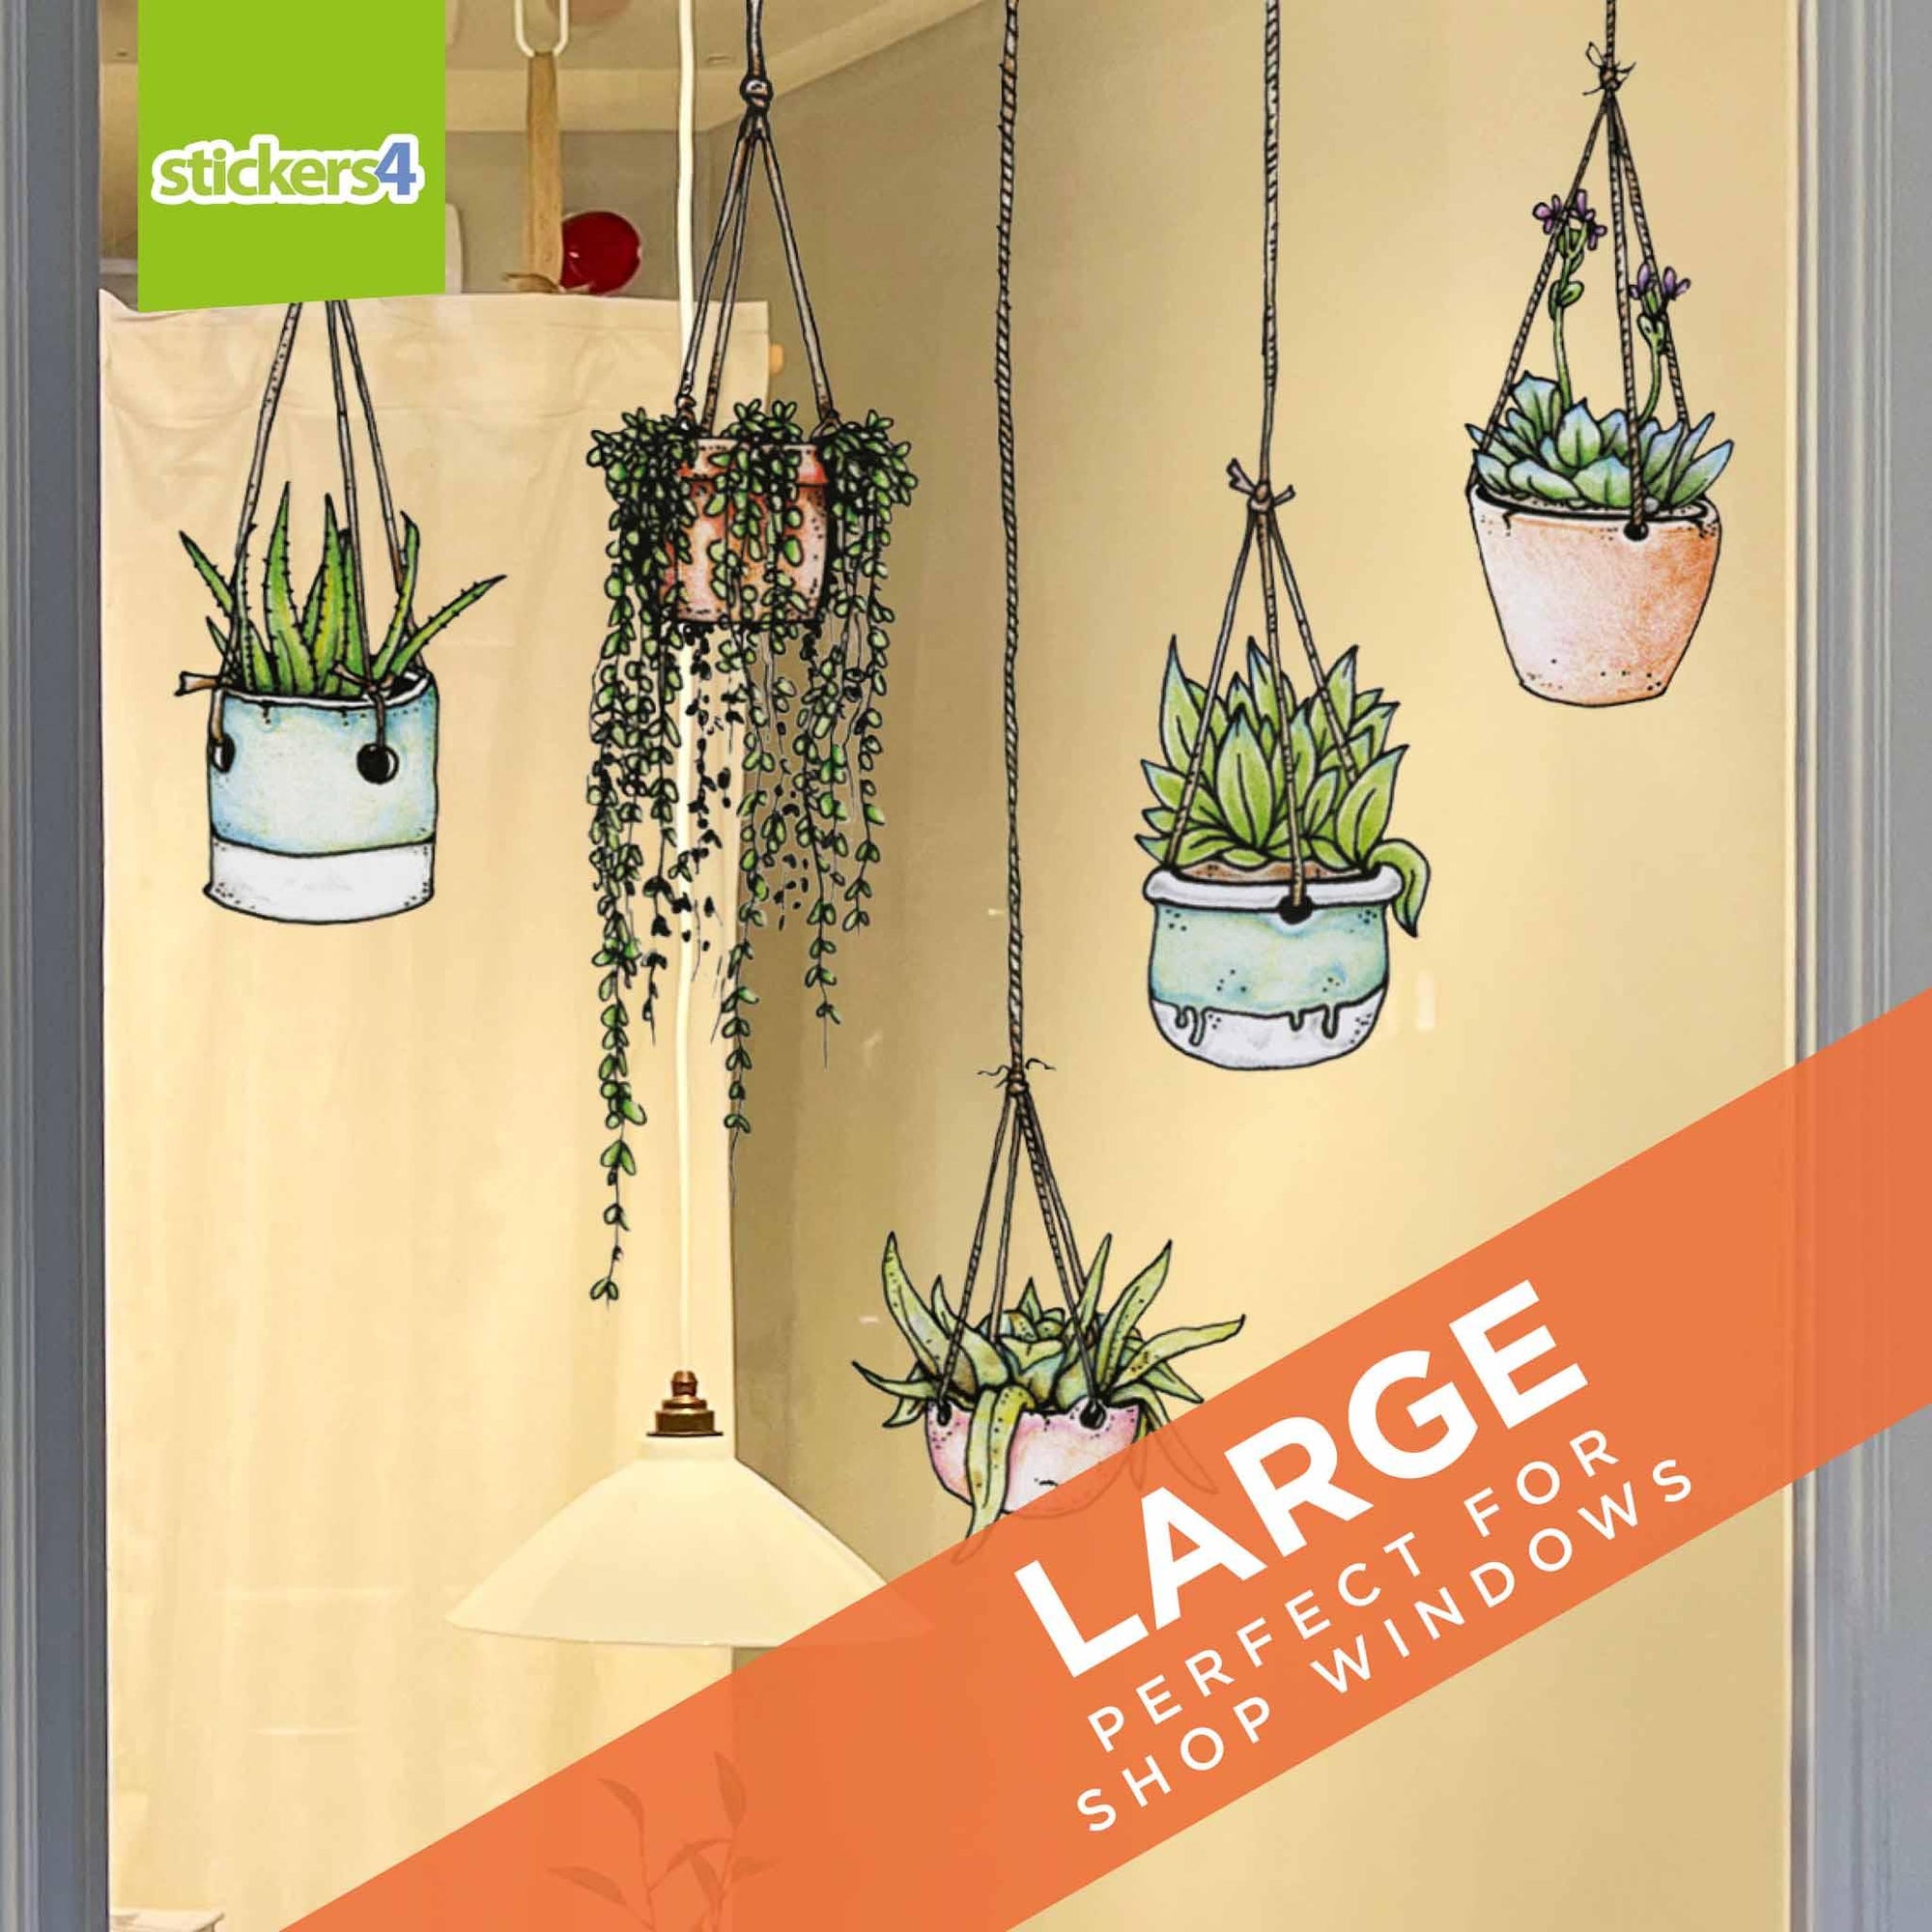 Original Set of 5 Illustrated Hanging Plant Stickers4 Window or Laptop Decorative Window Displays